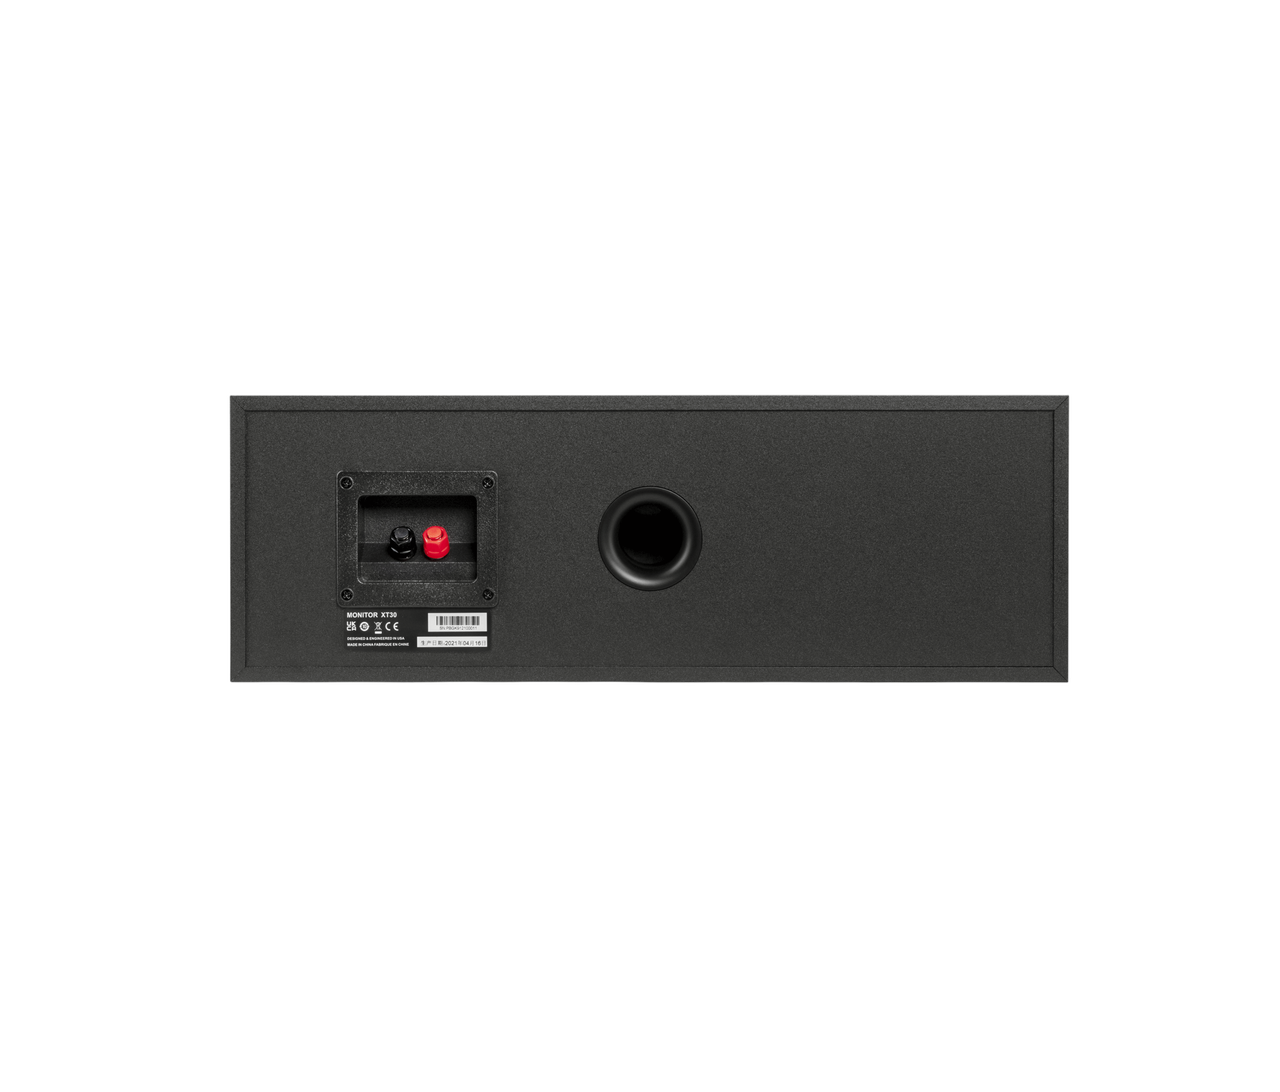 POLK AUDIO MXT60 5.1 SYSTEM - Black